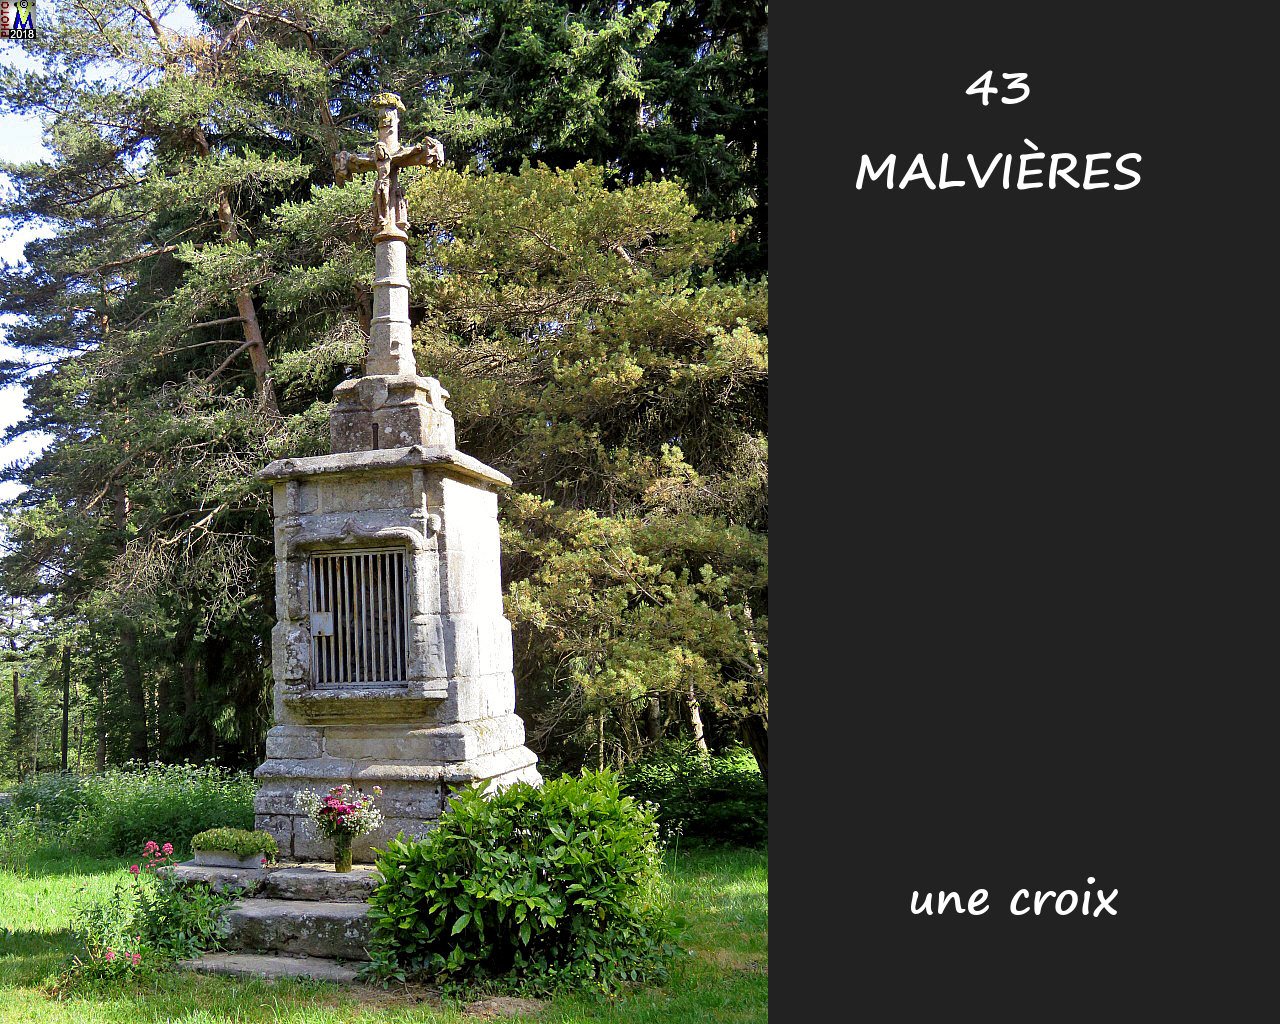 43MALVIERES_croix_100.jpg